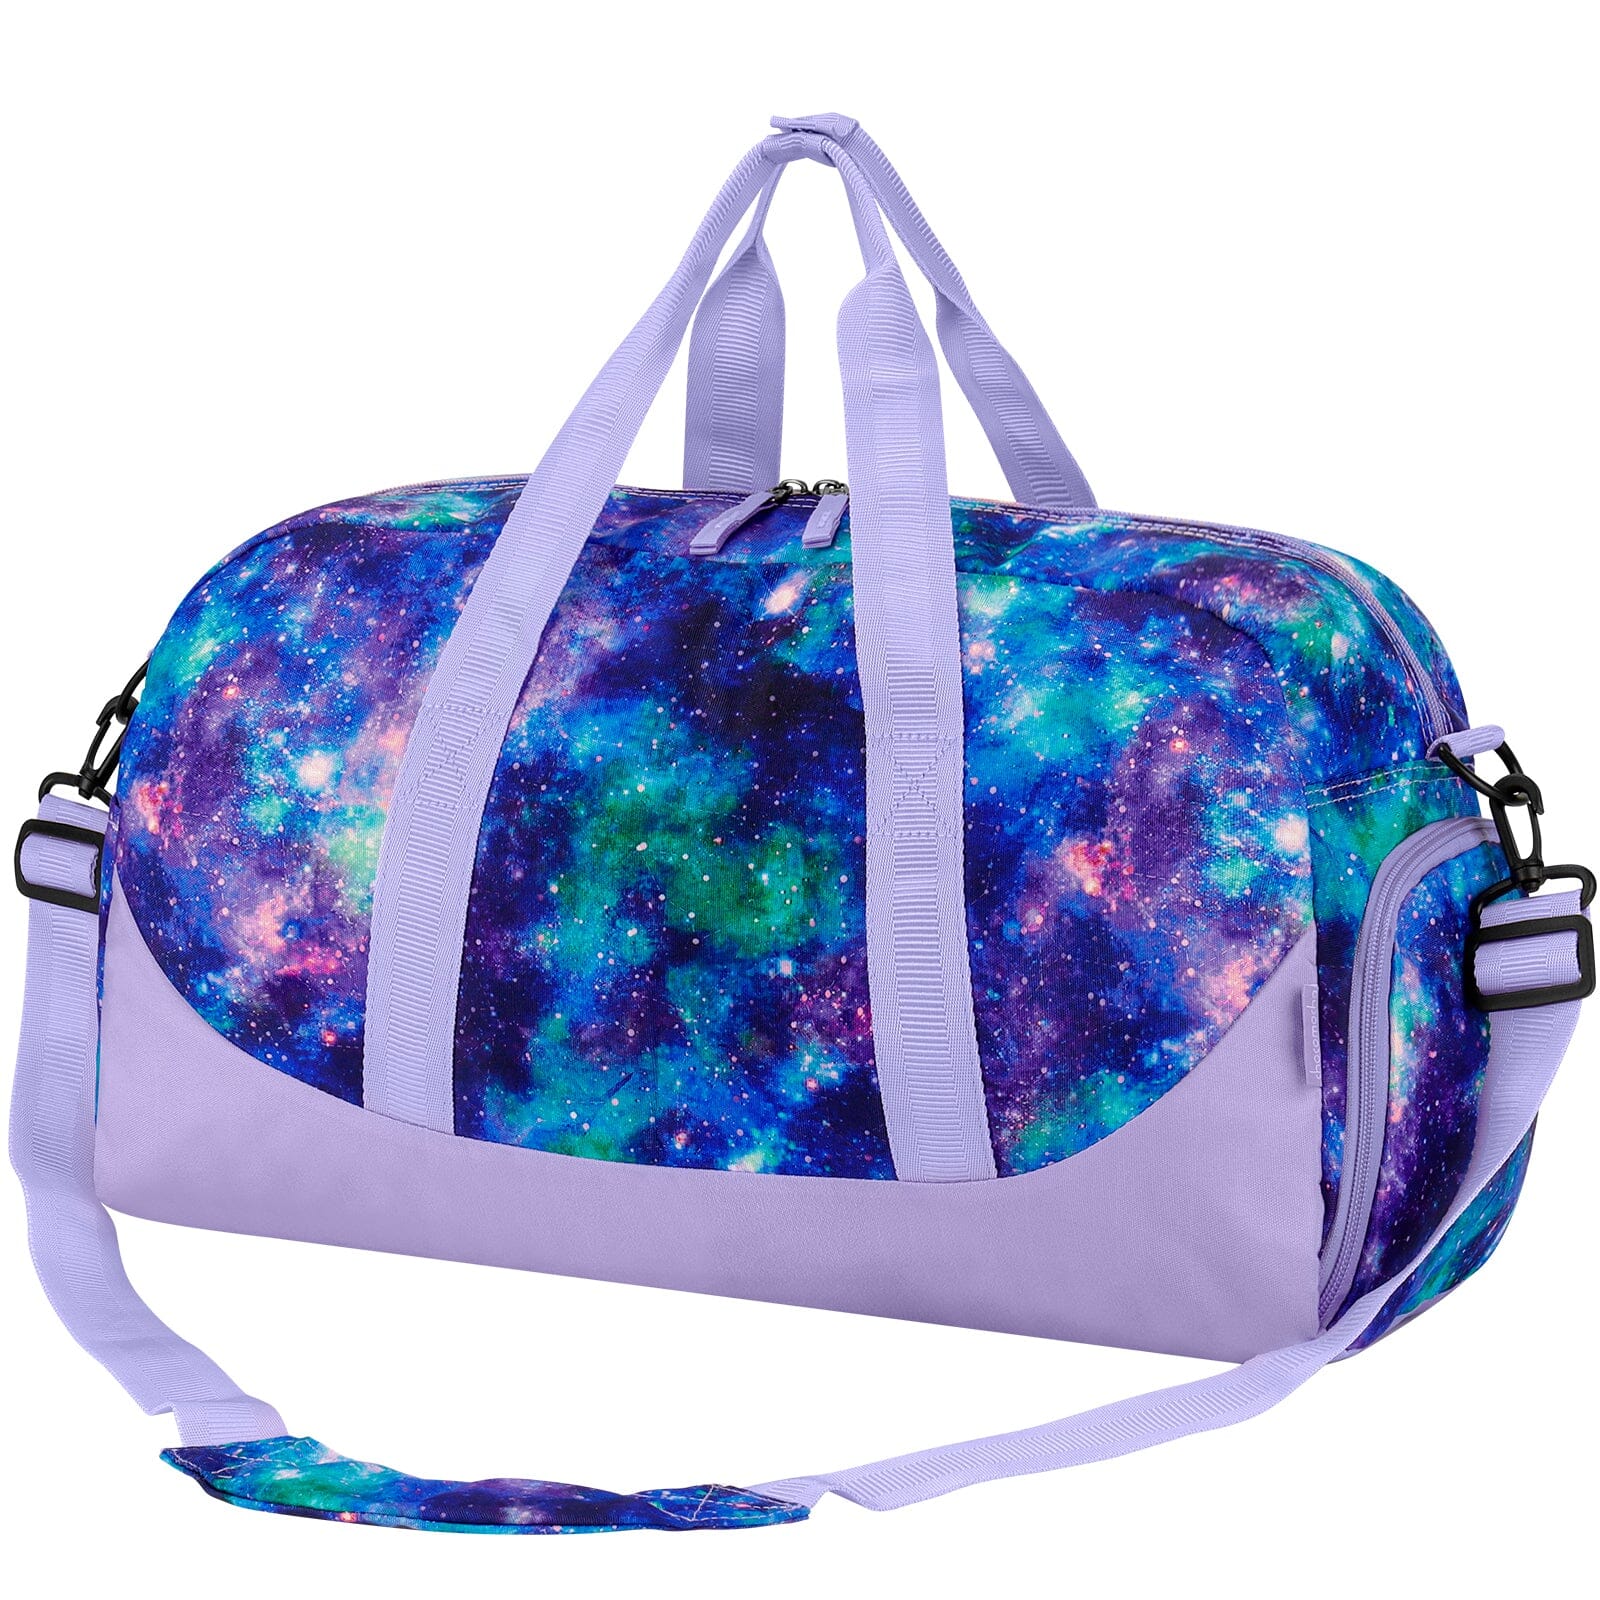 Choco Mocha Kids Purple-Blue Duffle Bag for Girls, Kids Galaxy Travel Bag 20.08*9.06*10.63 Inches chocomochakids 